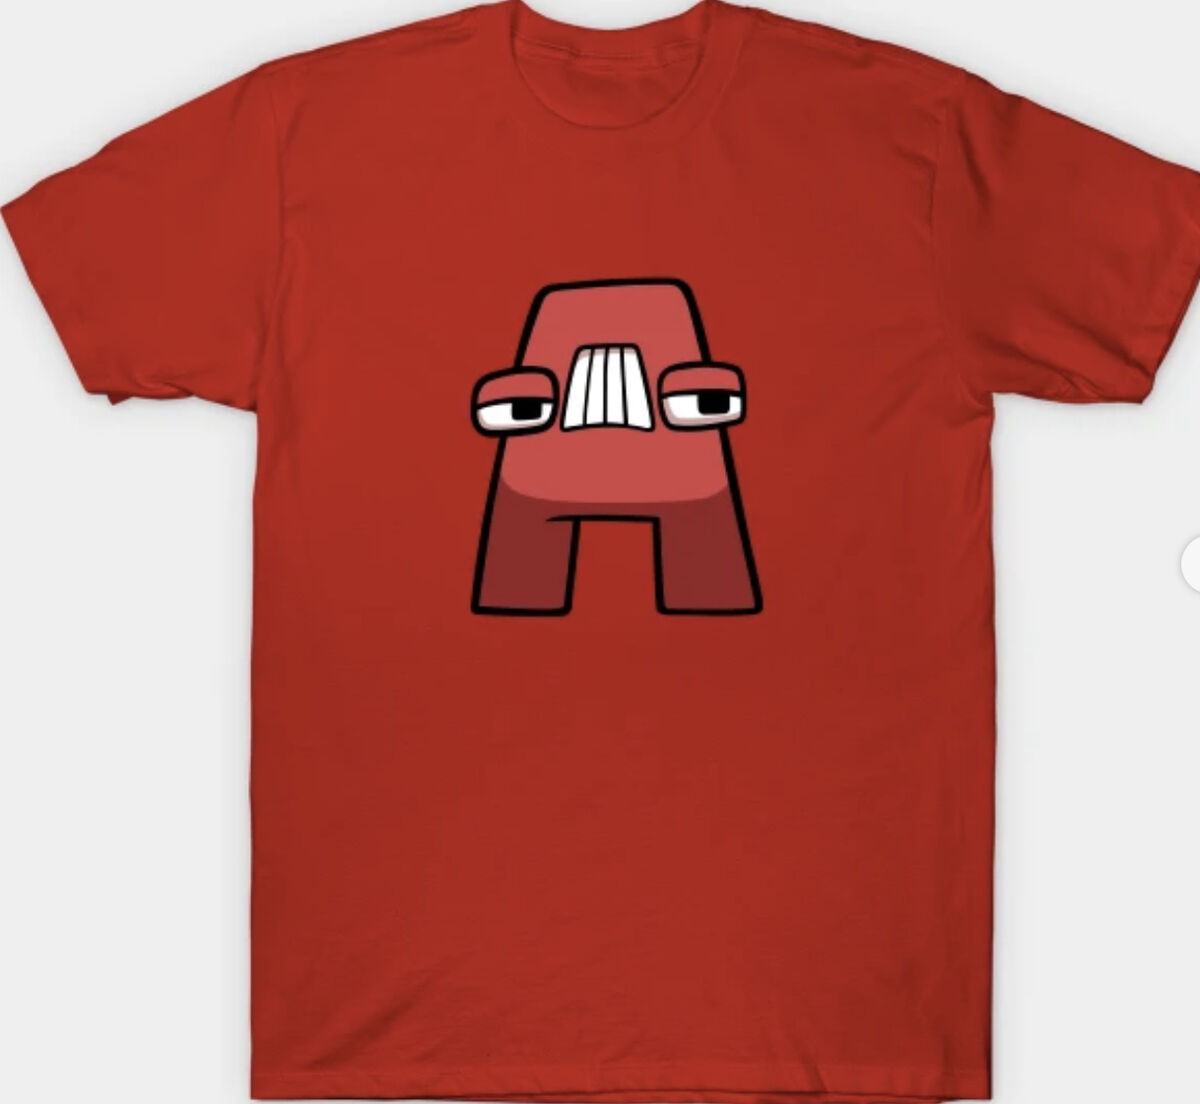 Alphabet Lore letter F T-Shirt